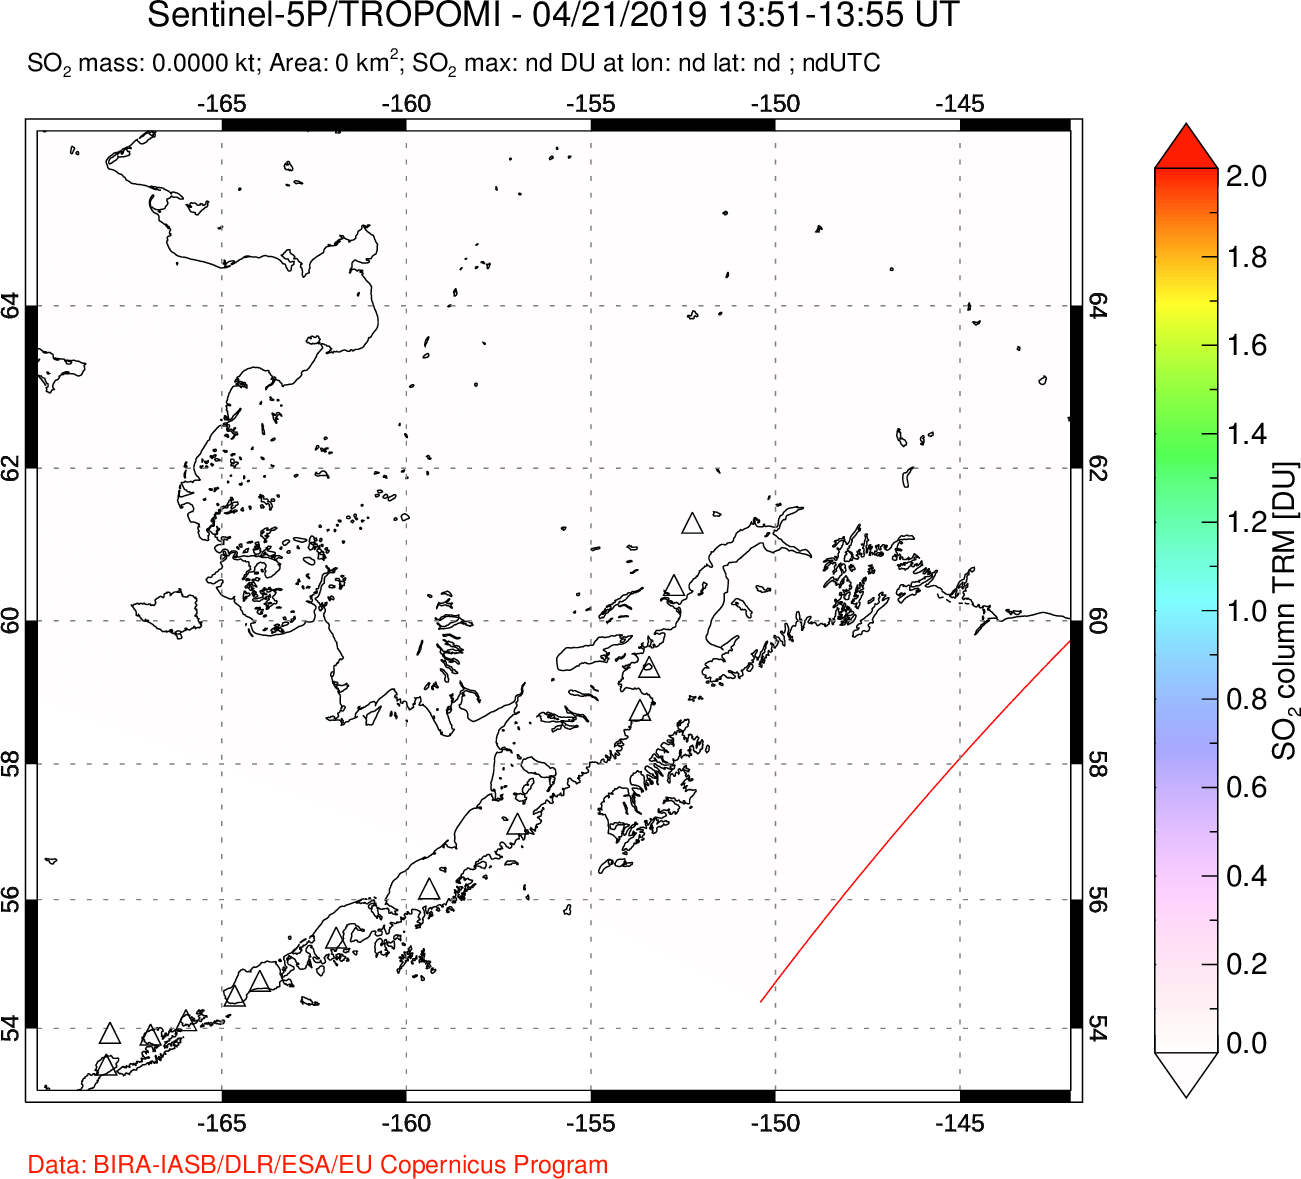 A sulfur dioxide image over Alaska, USA on Apr 21, 2019.